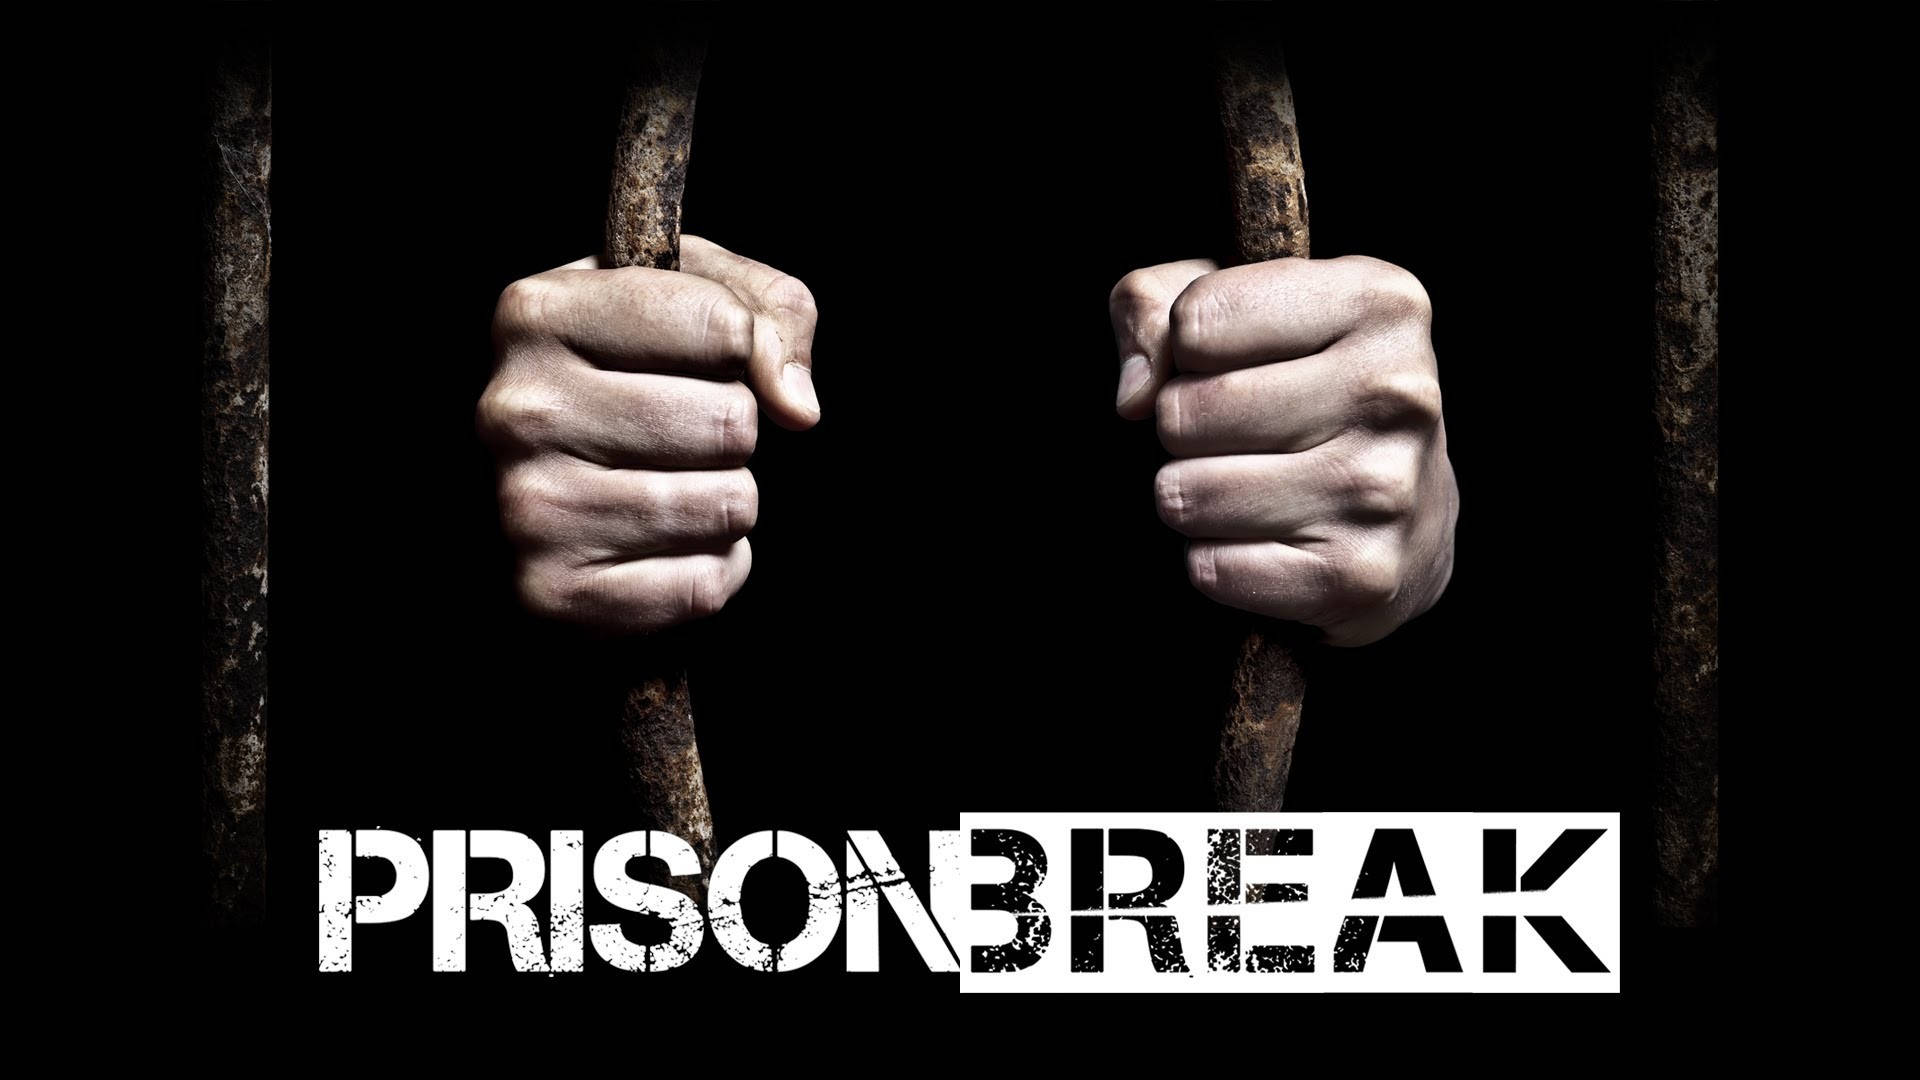 Prison Break Hand Behind Bars Cover Wallpaper